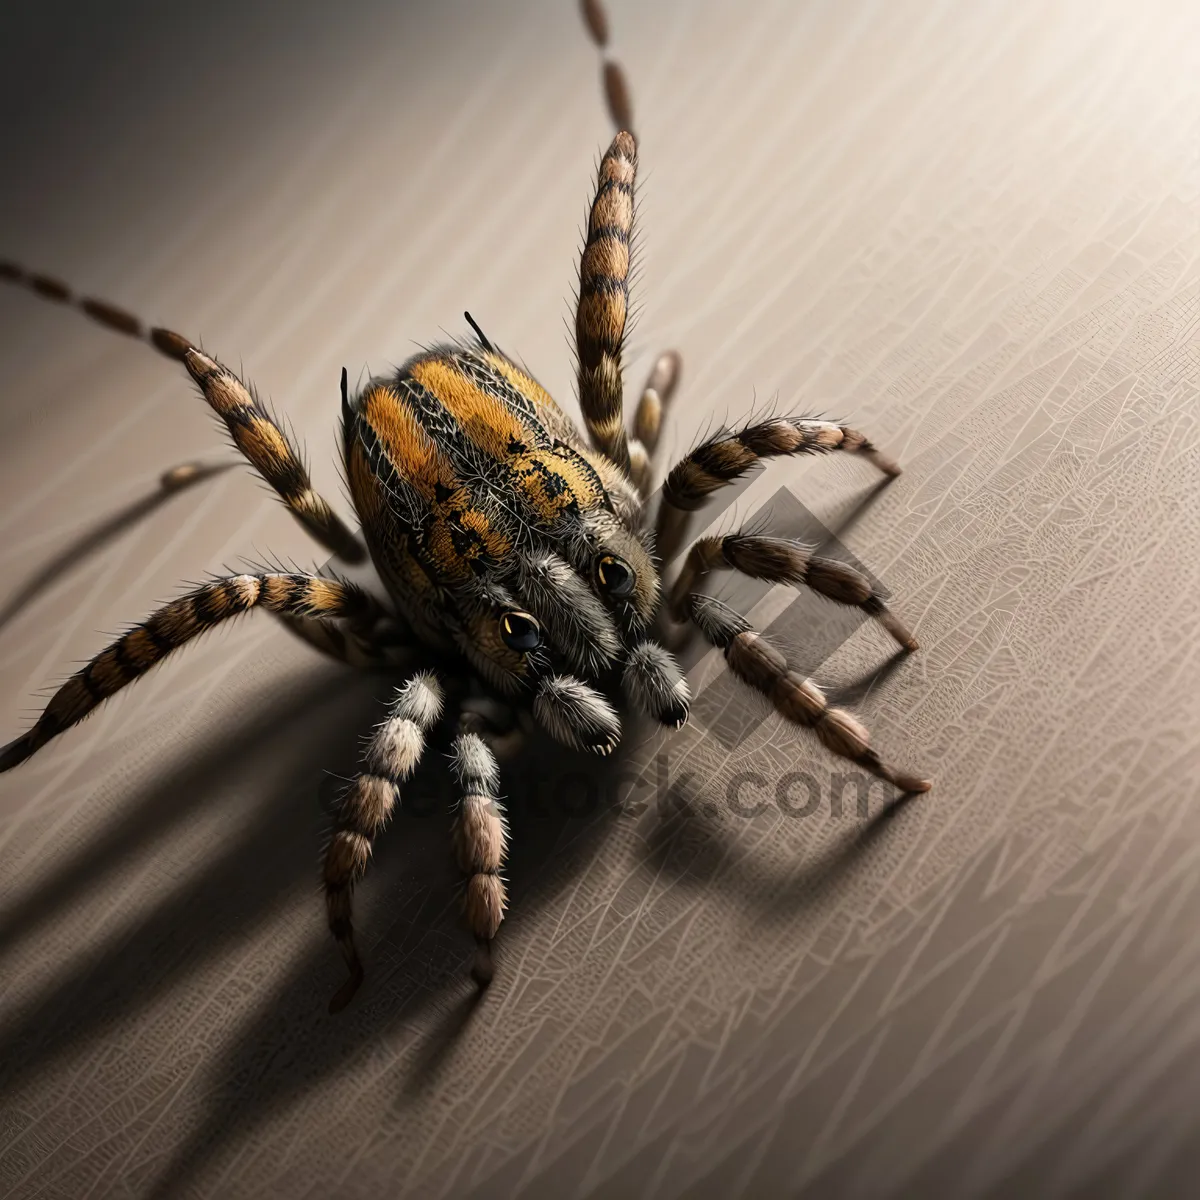 Picture of Menacing Garden Spider: A Creepy, Black Arachnid Predator